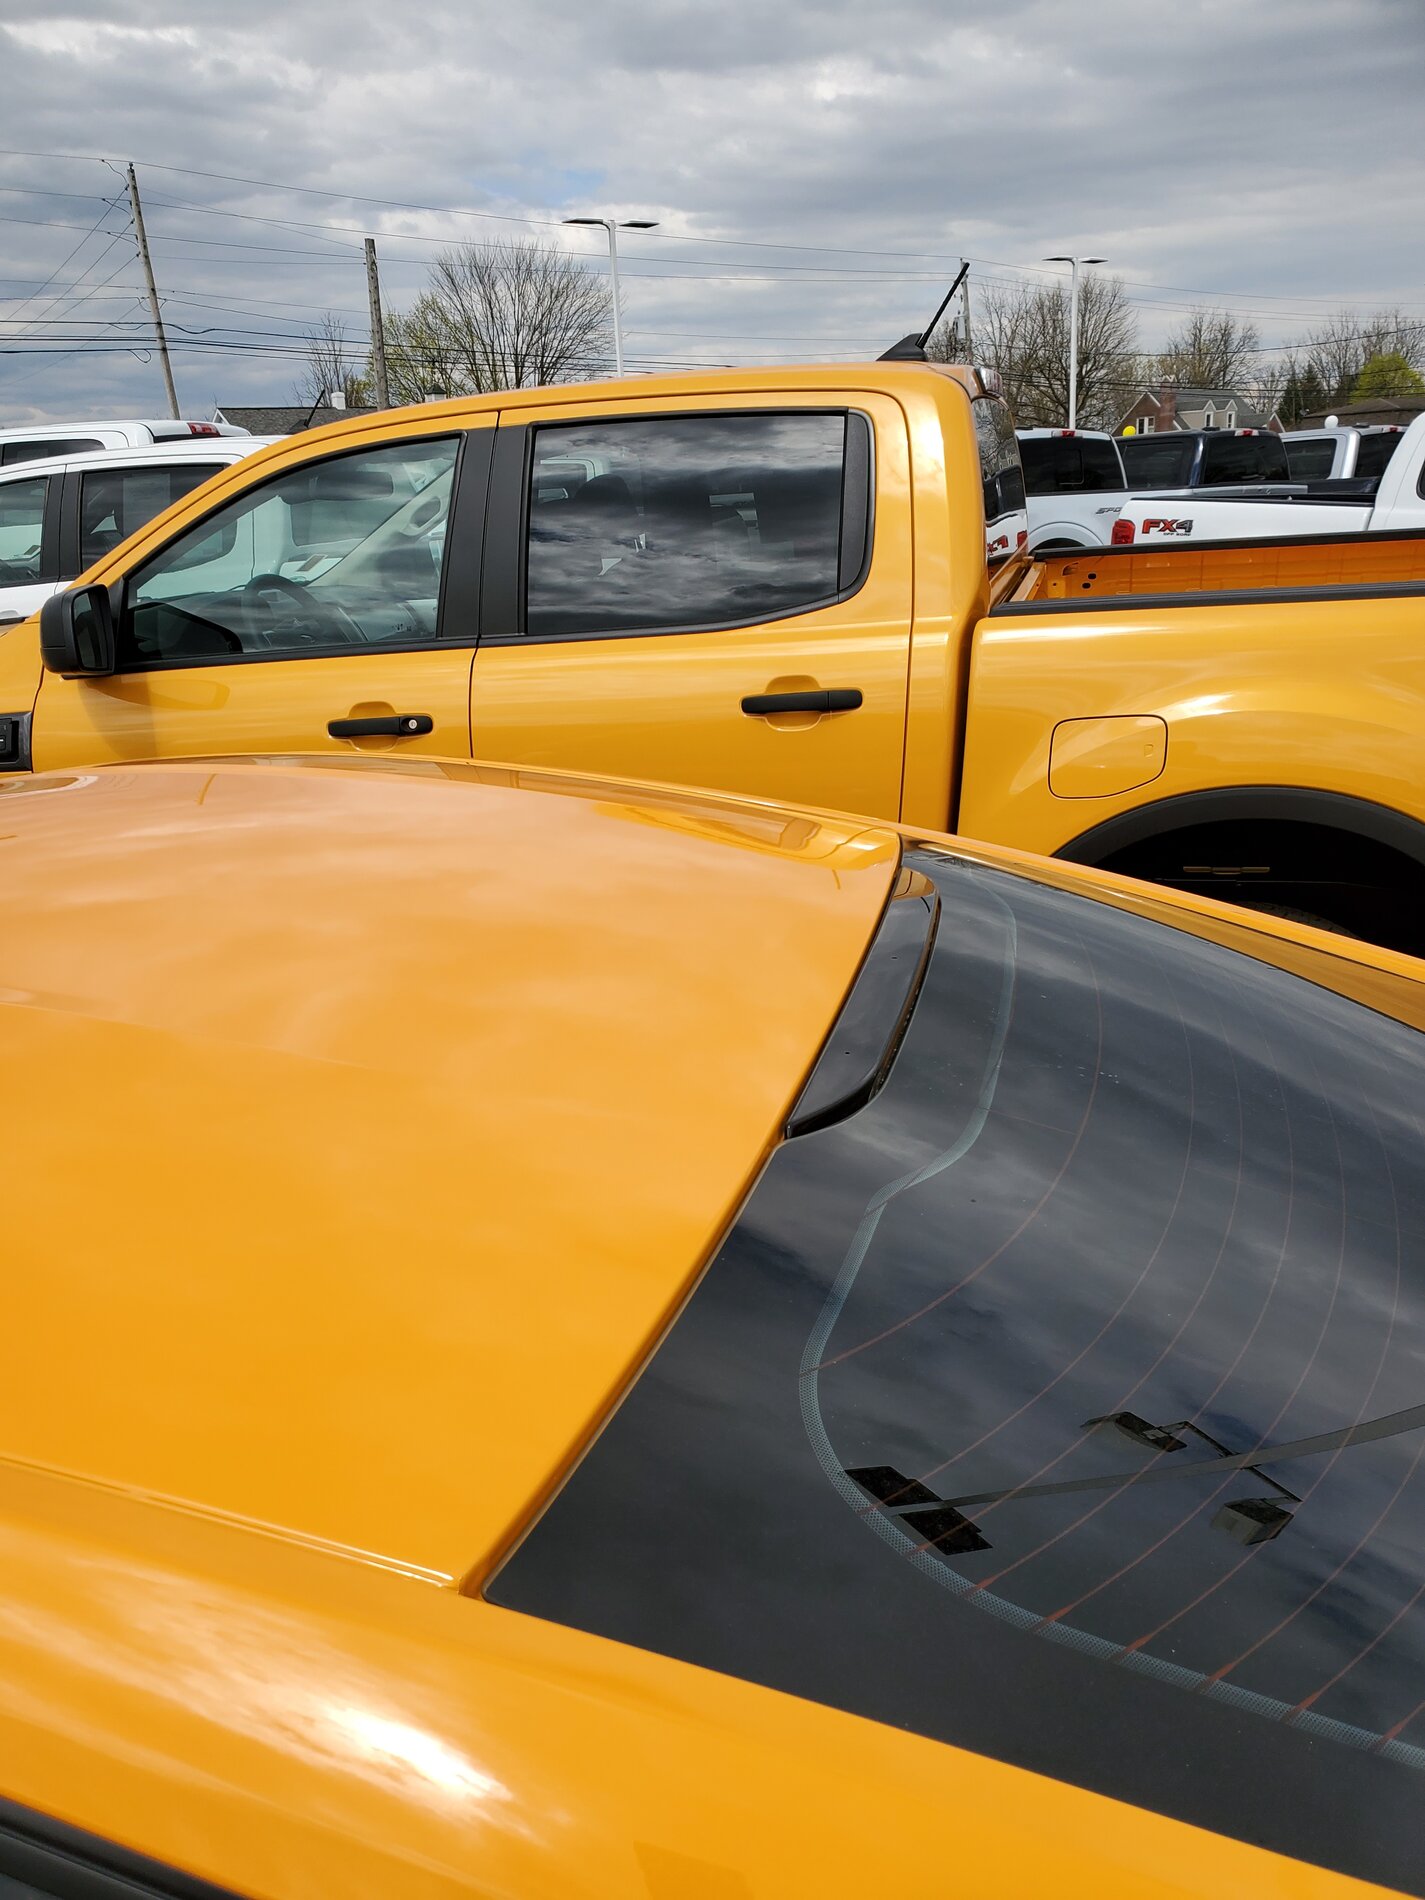 Ford Bronco Cyber Orange in person comparison. 4F712C94-C6FE-4217-84BE-D3AC53C940C2